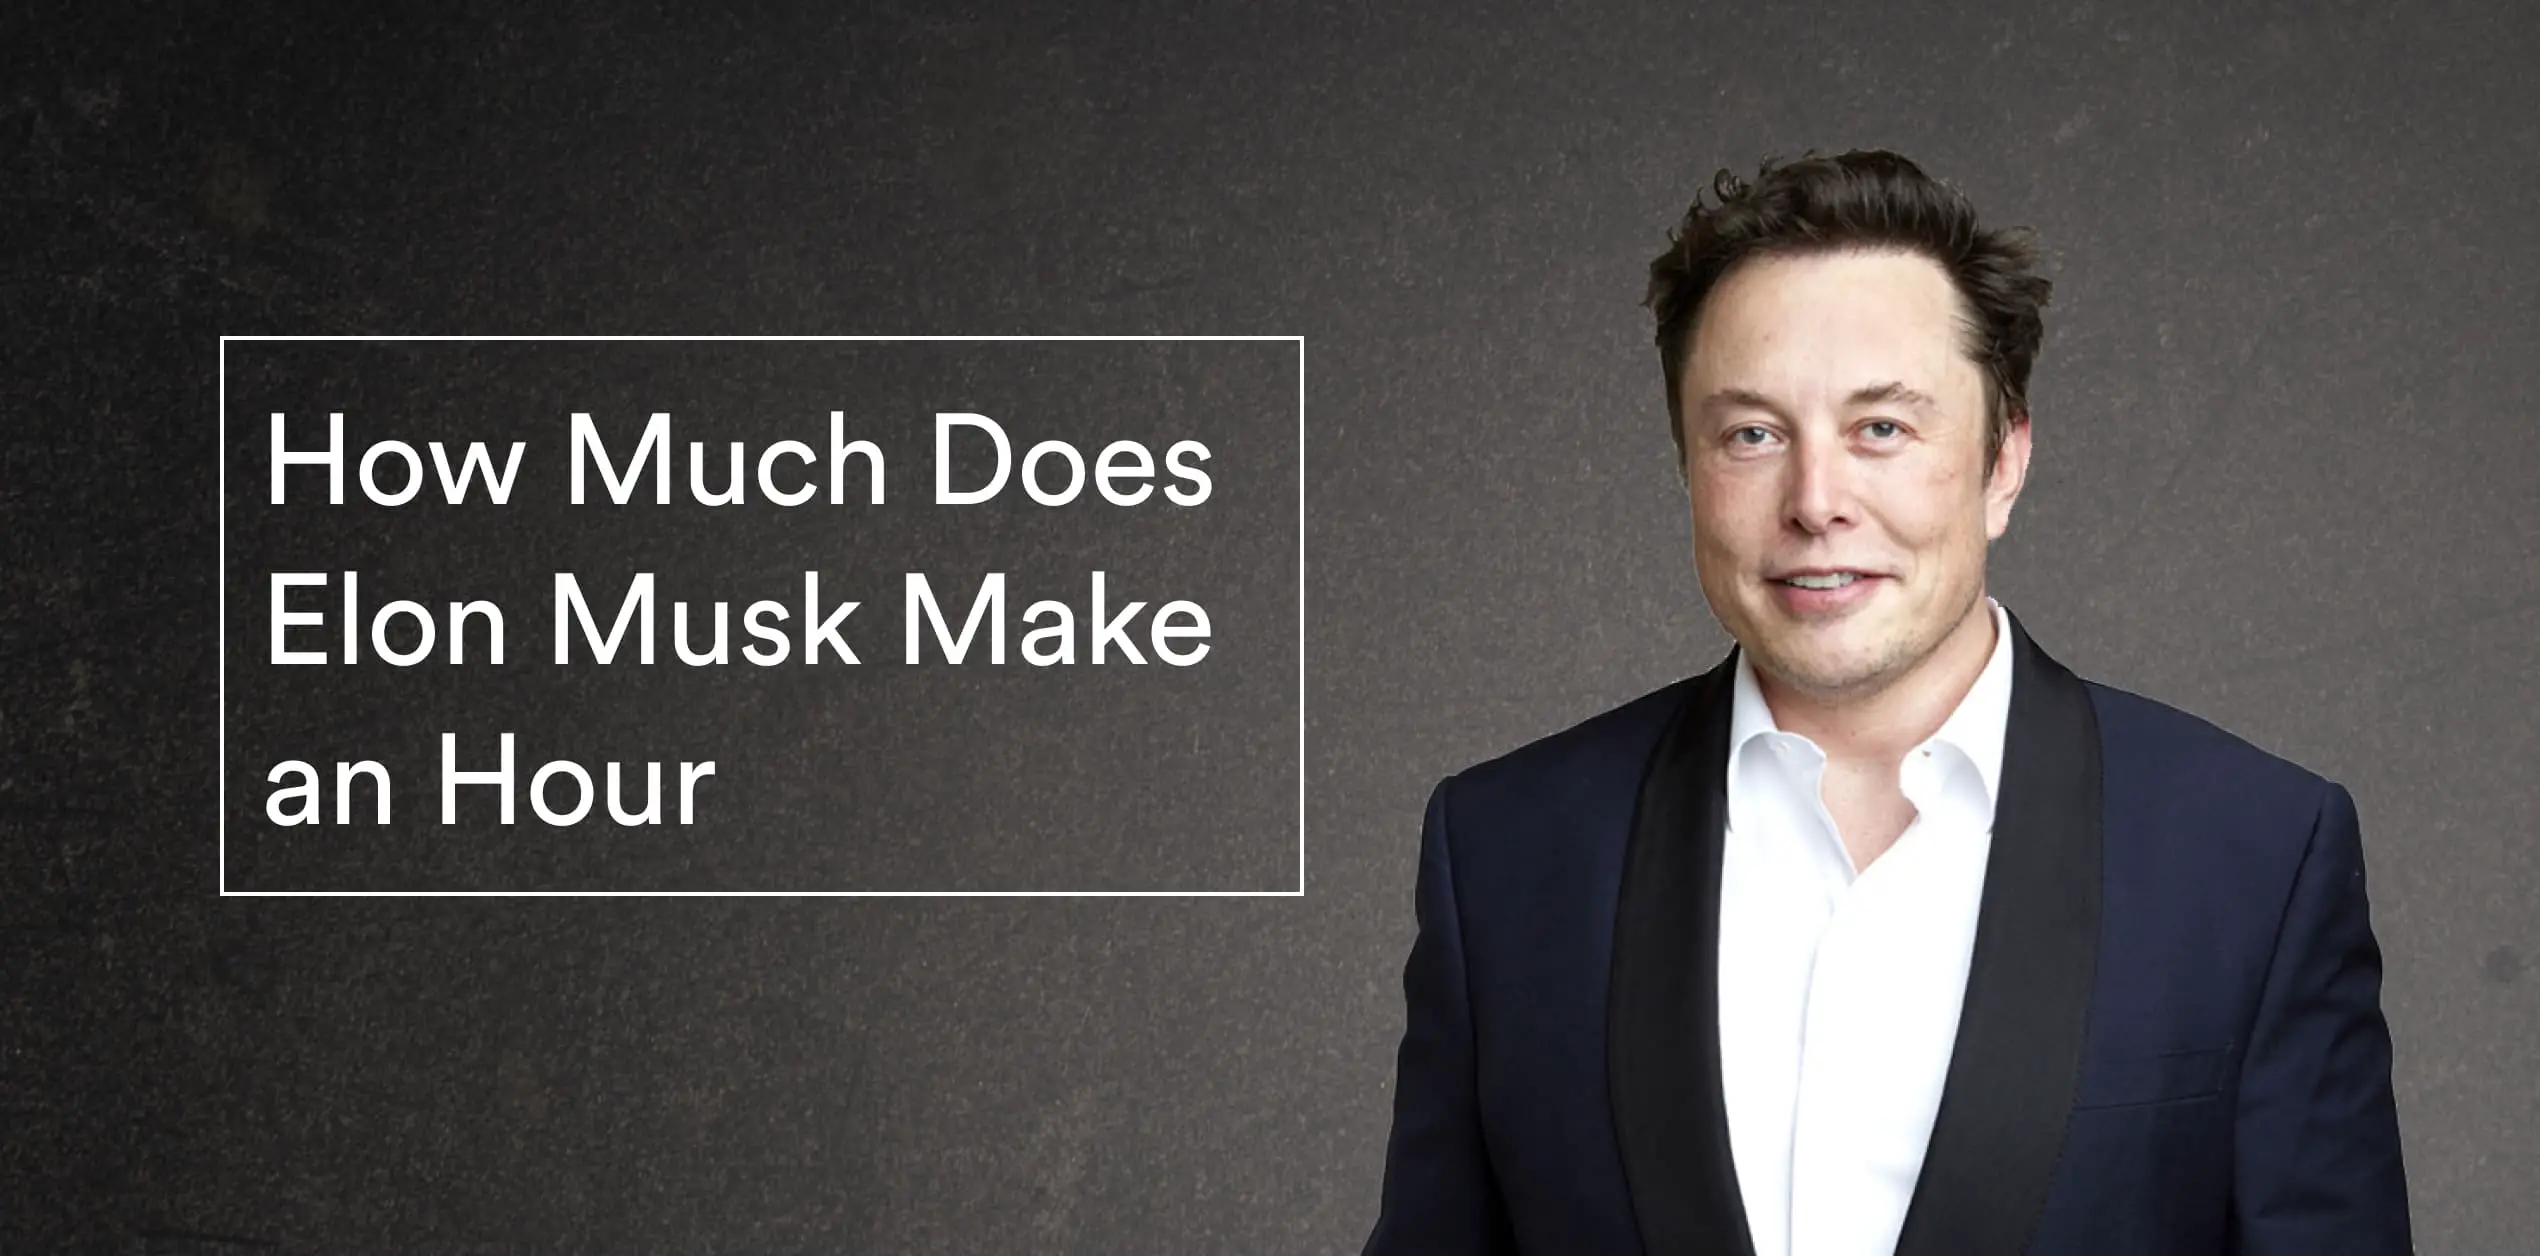 How much does Elon Musk make an hour